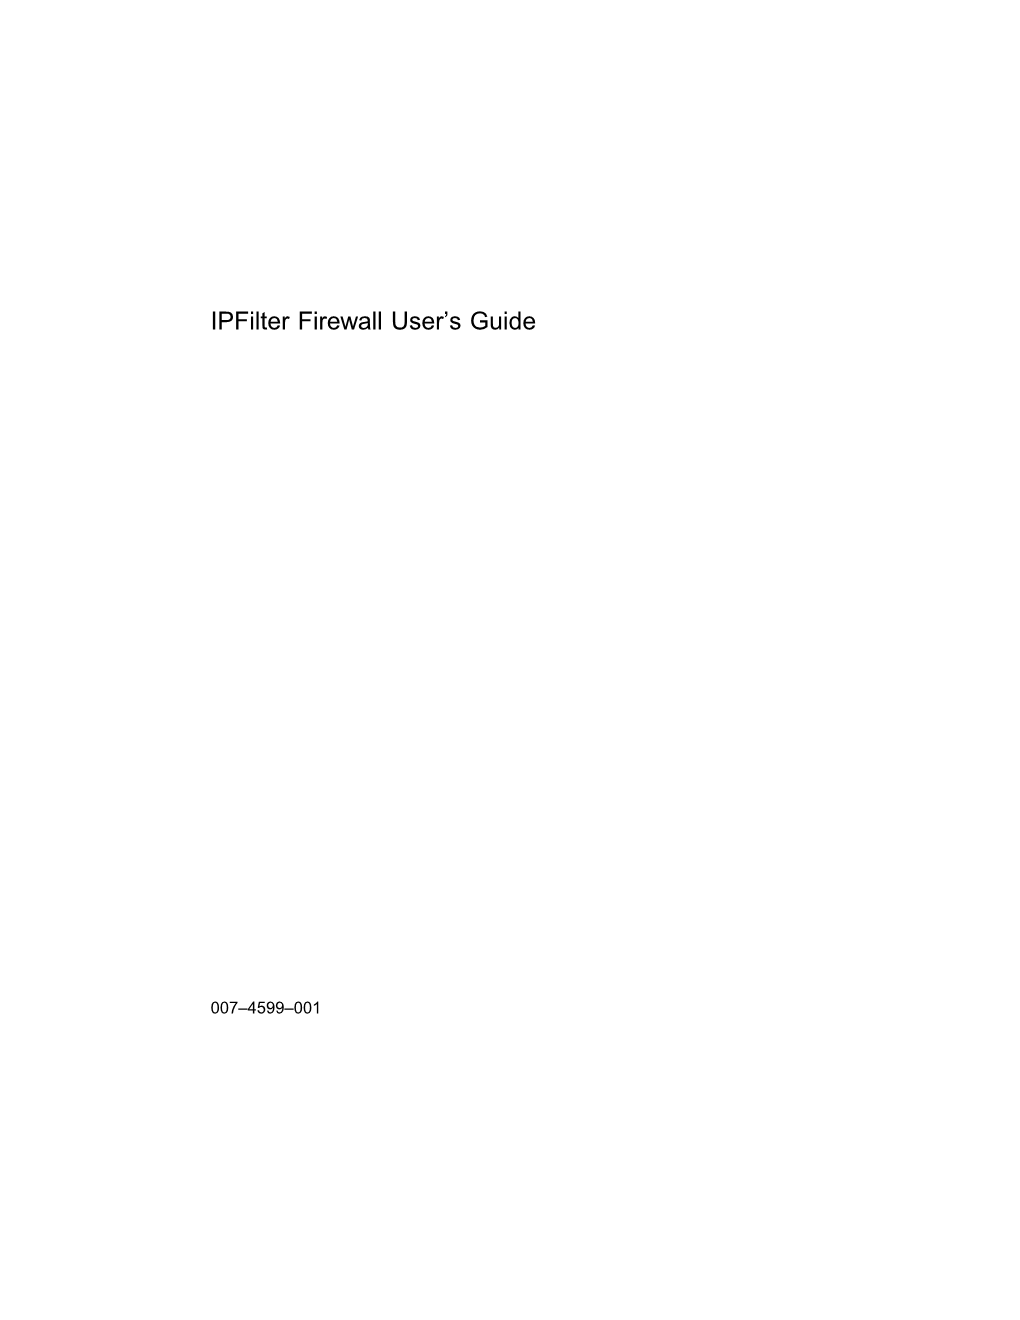 Ipfilter Firewall User's Guide